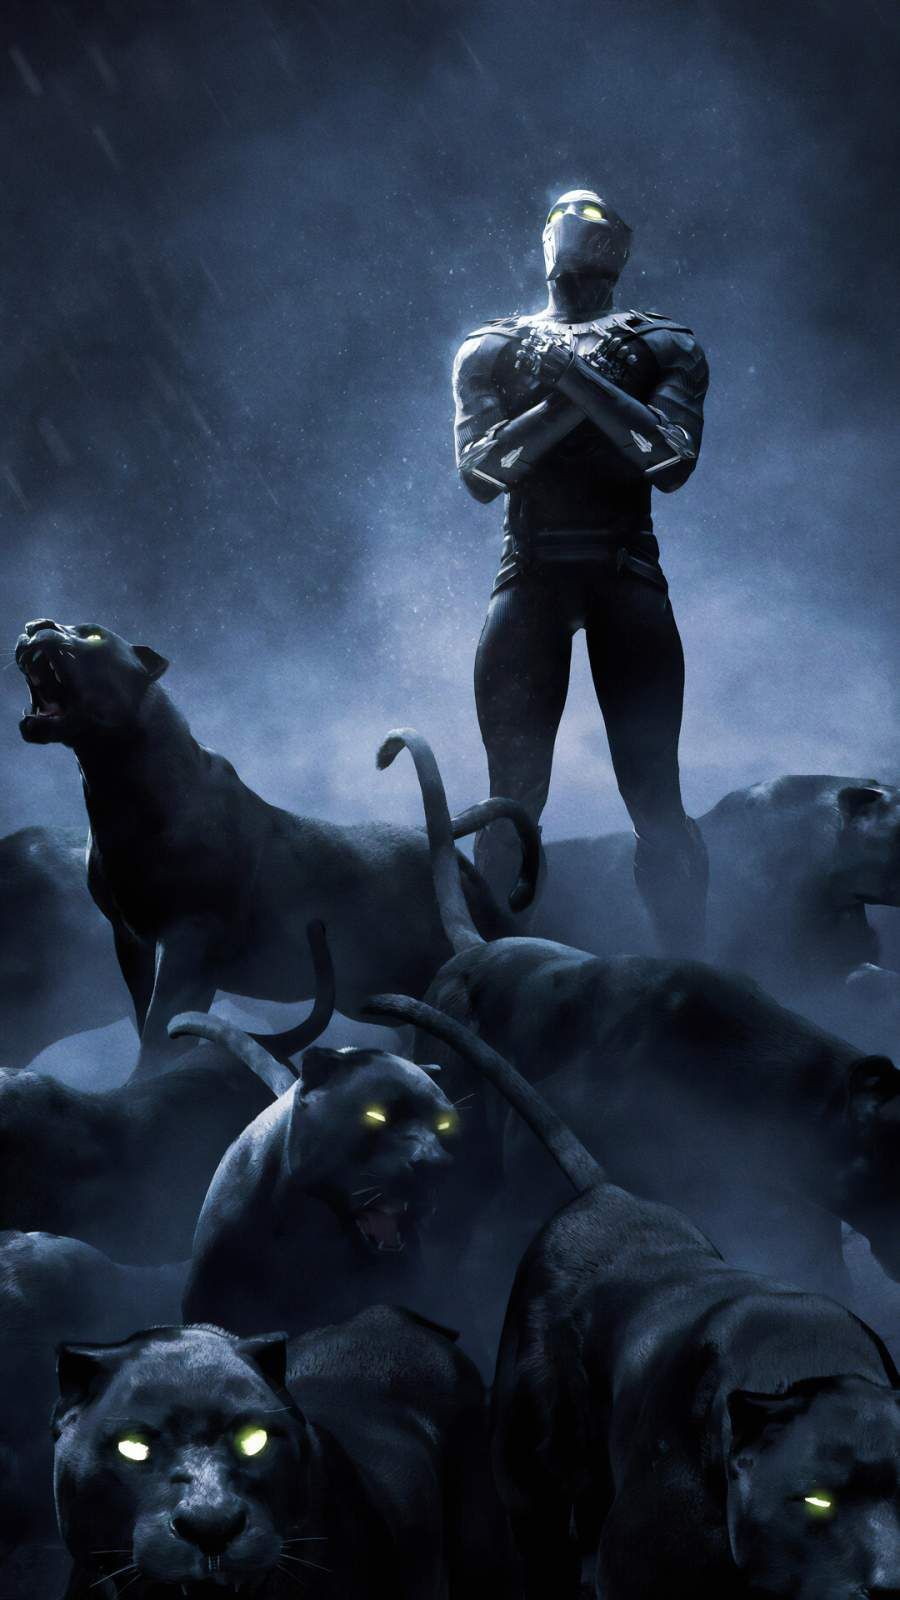 Black Panther Rise up iPhone Wallpaper. Black panther art, Marvel superhero posters, Black panther marvel